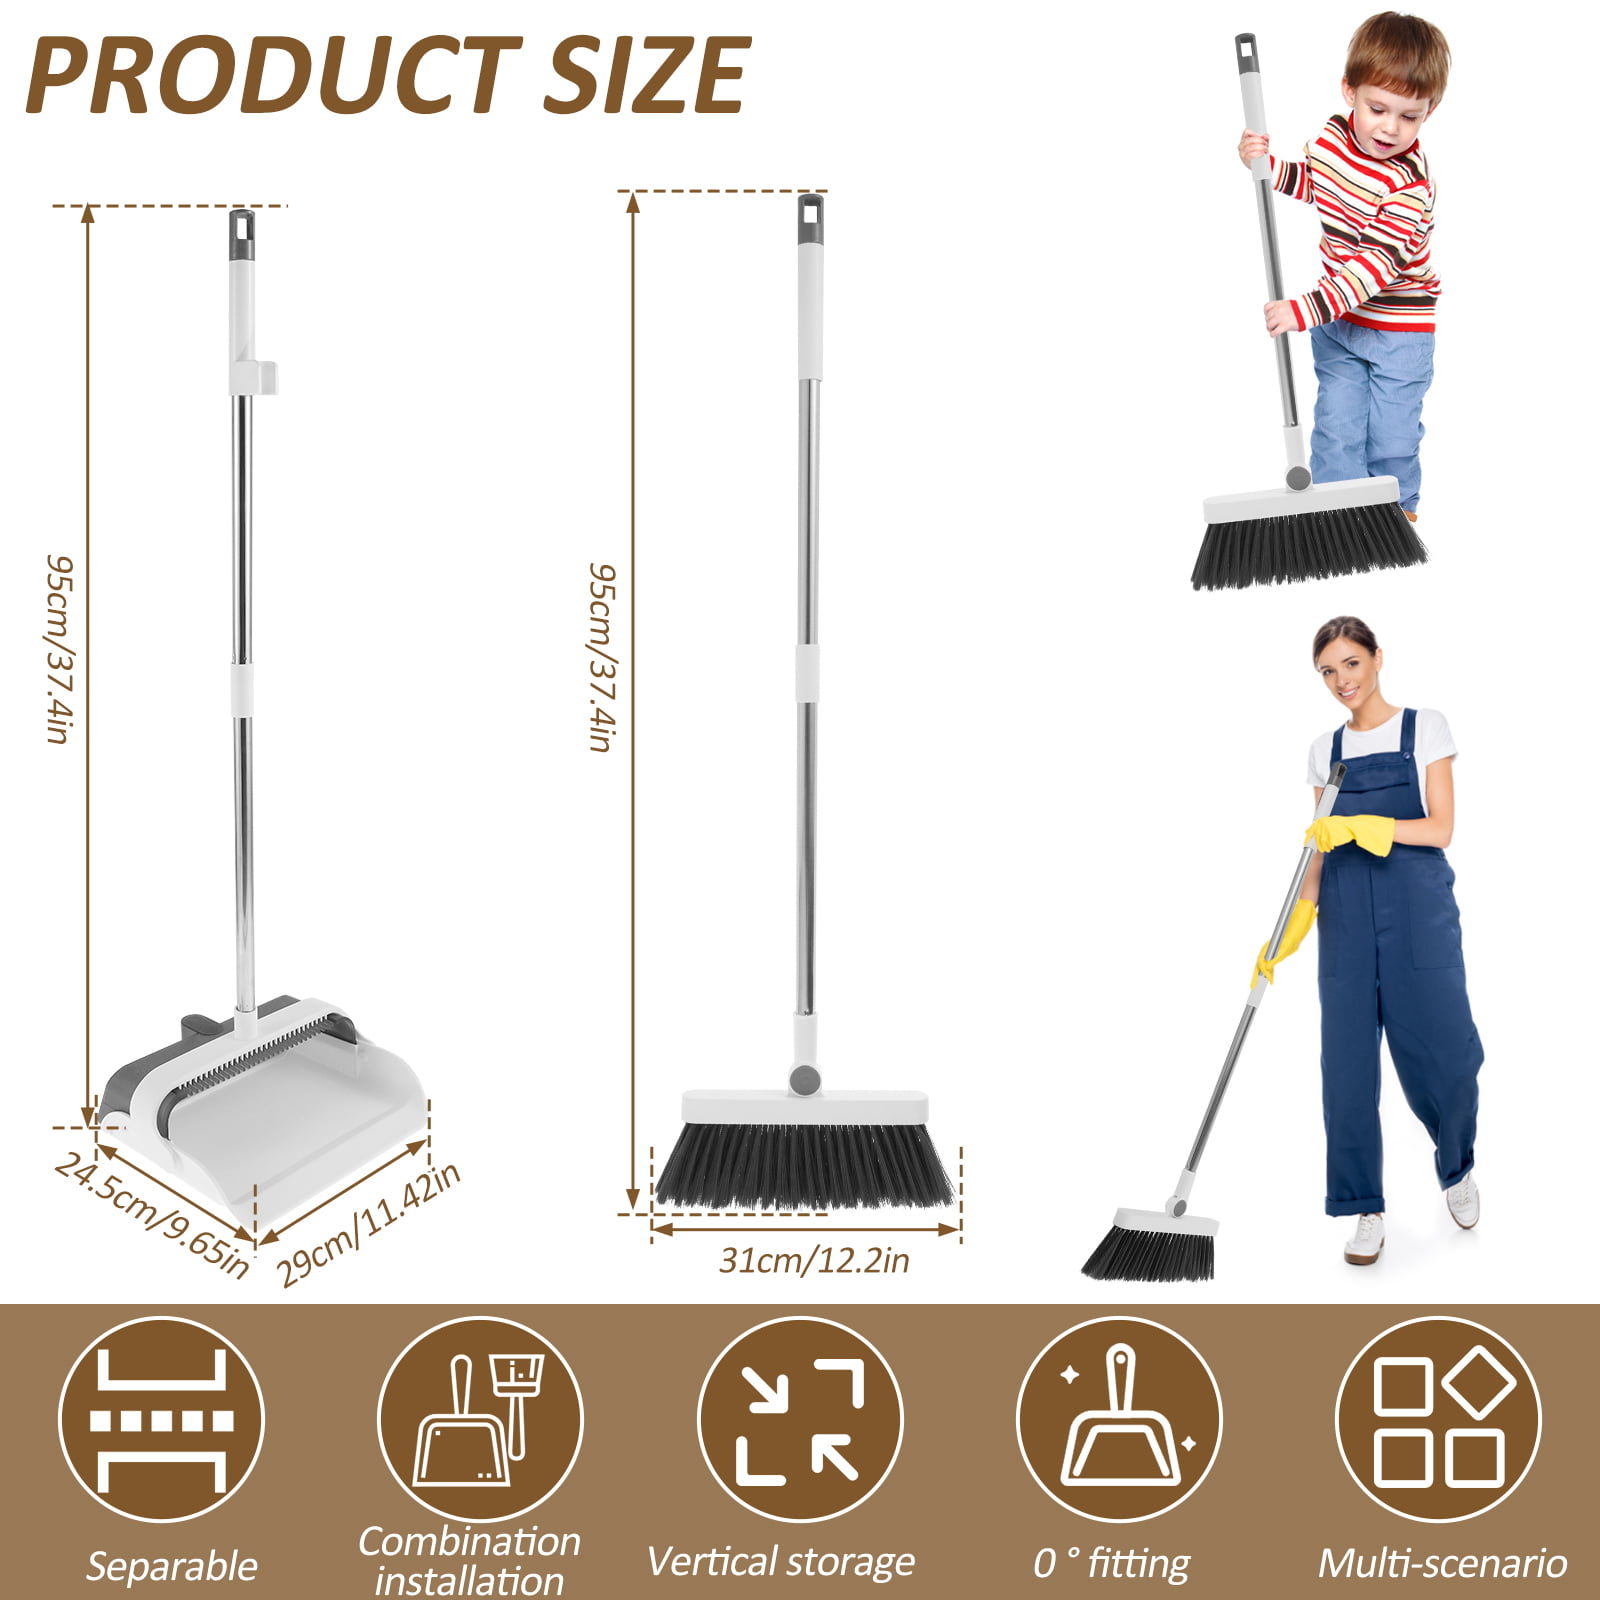 Extendable Upright Dustpan and Broom Set - PortoTrash